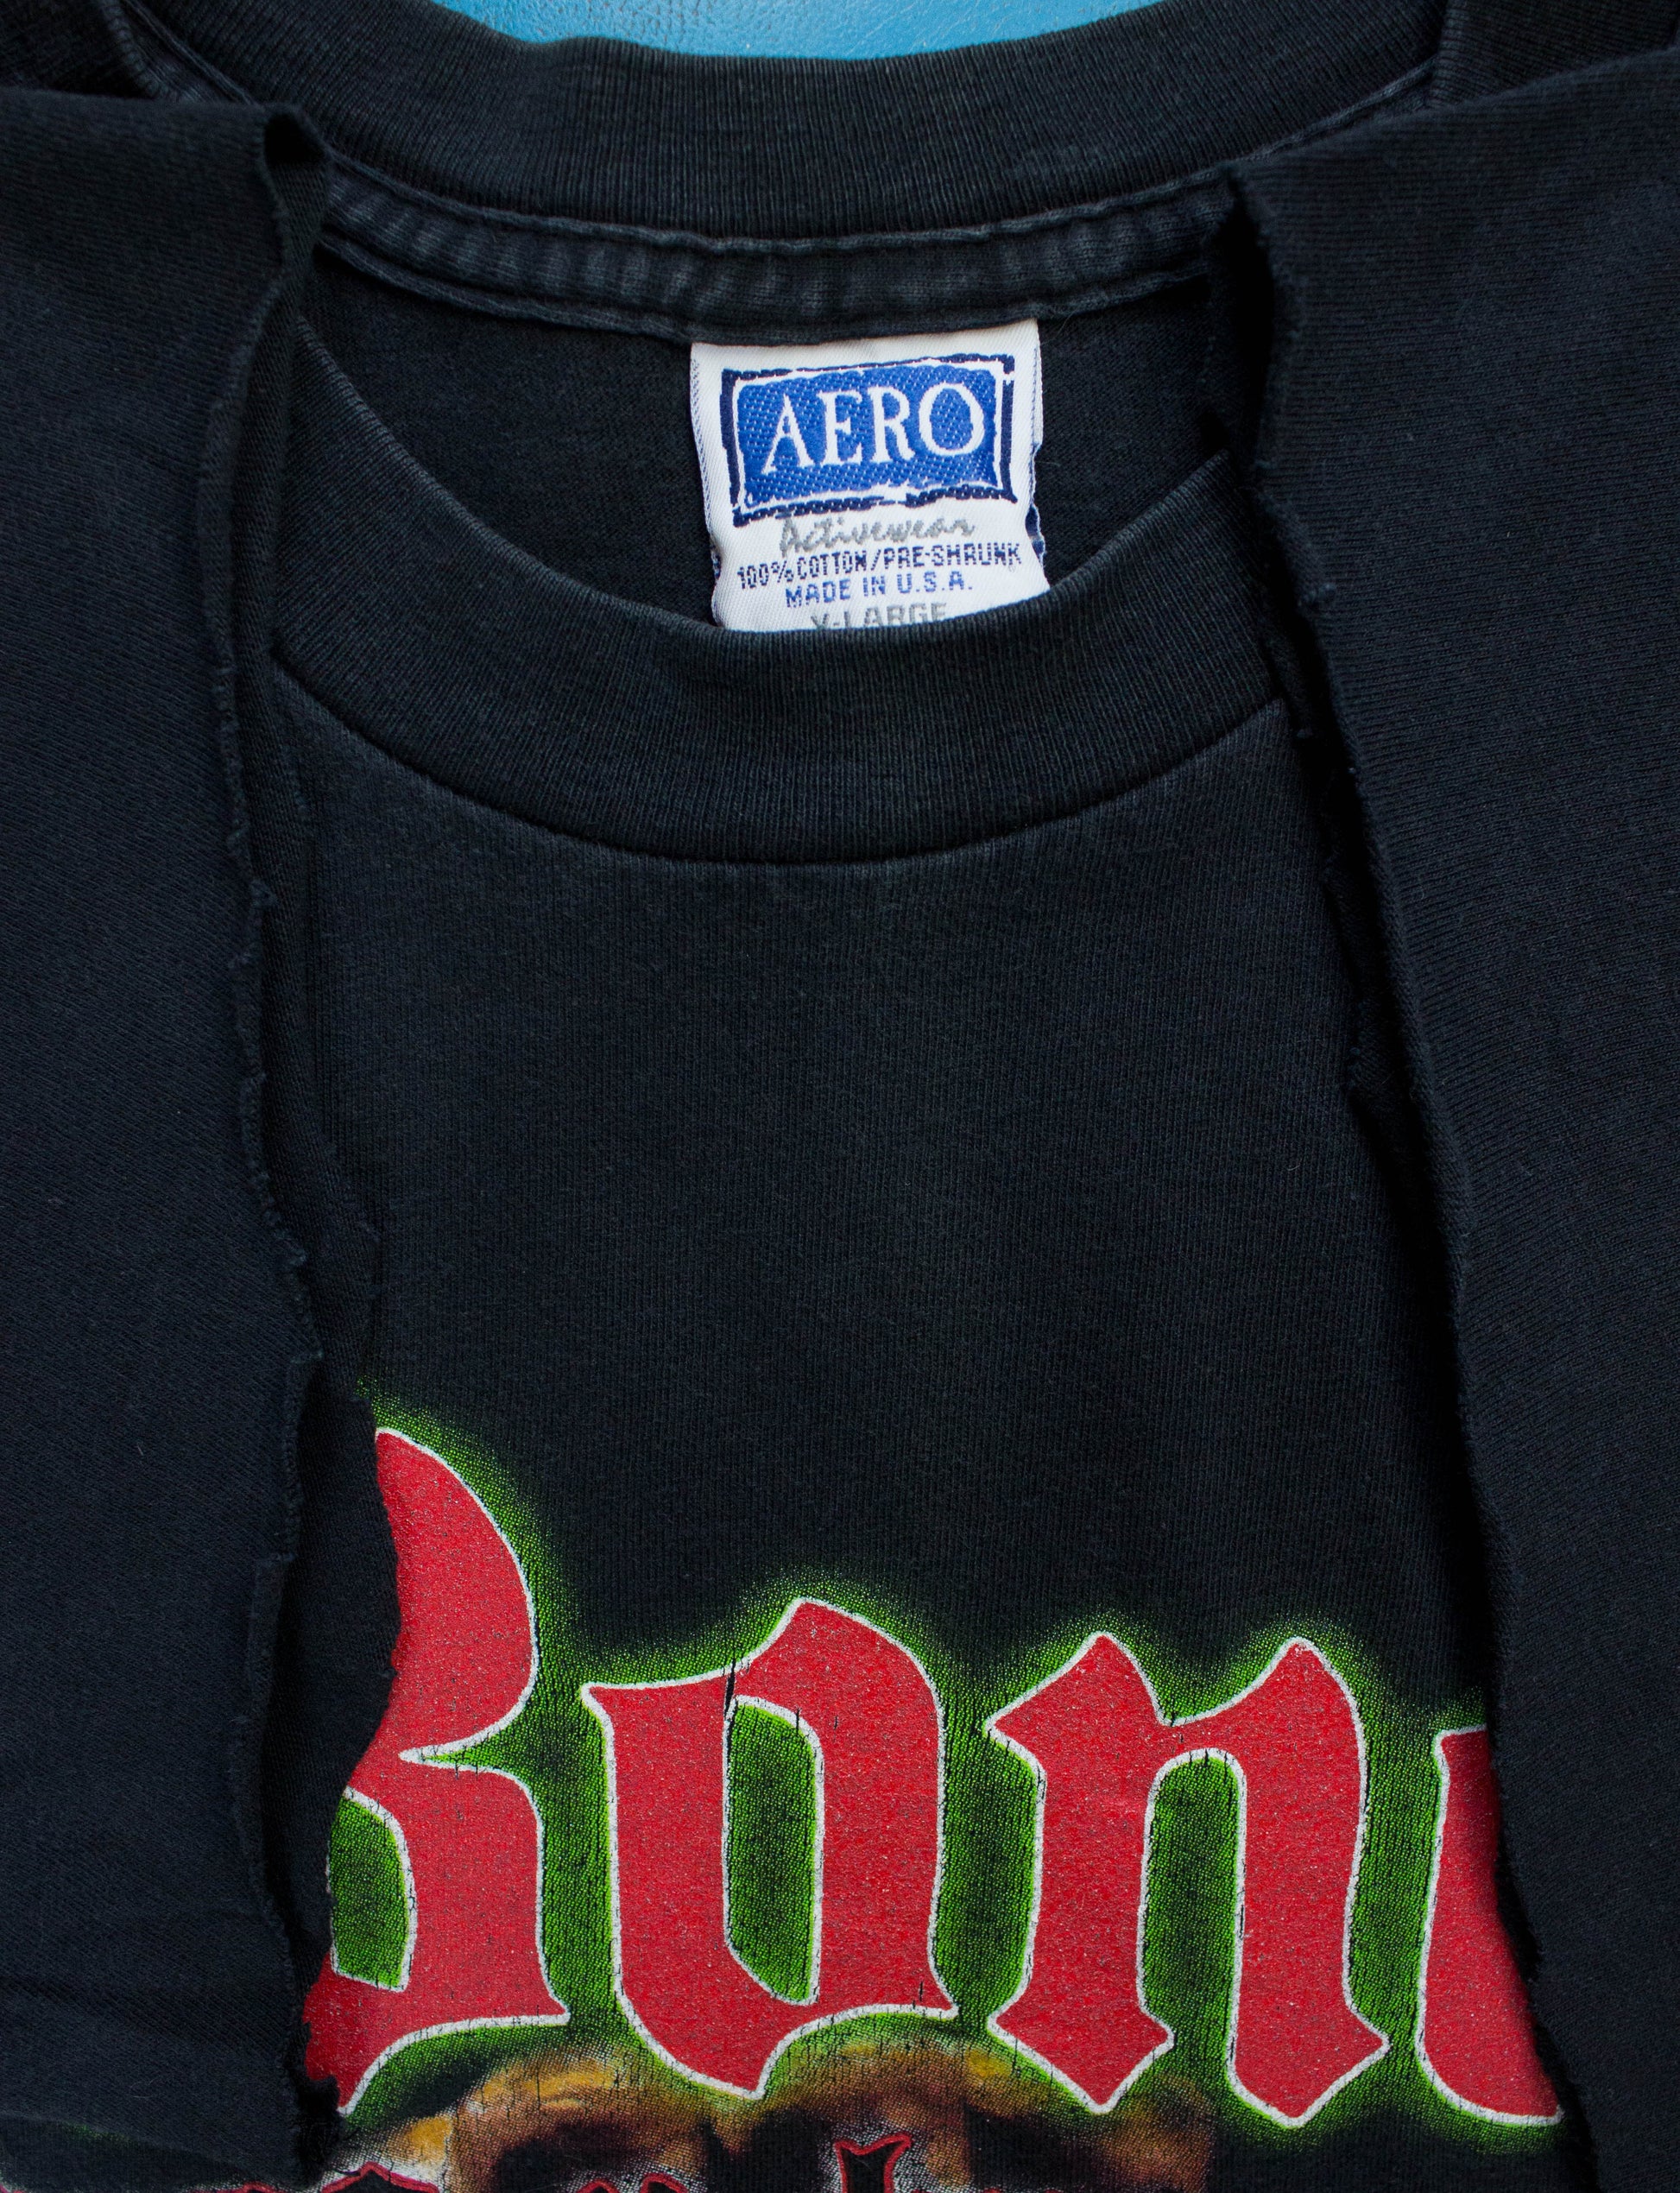 Bone Thugs N Harmony 1997 Art Of War Rap Tee Concert T Shirt XL